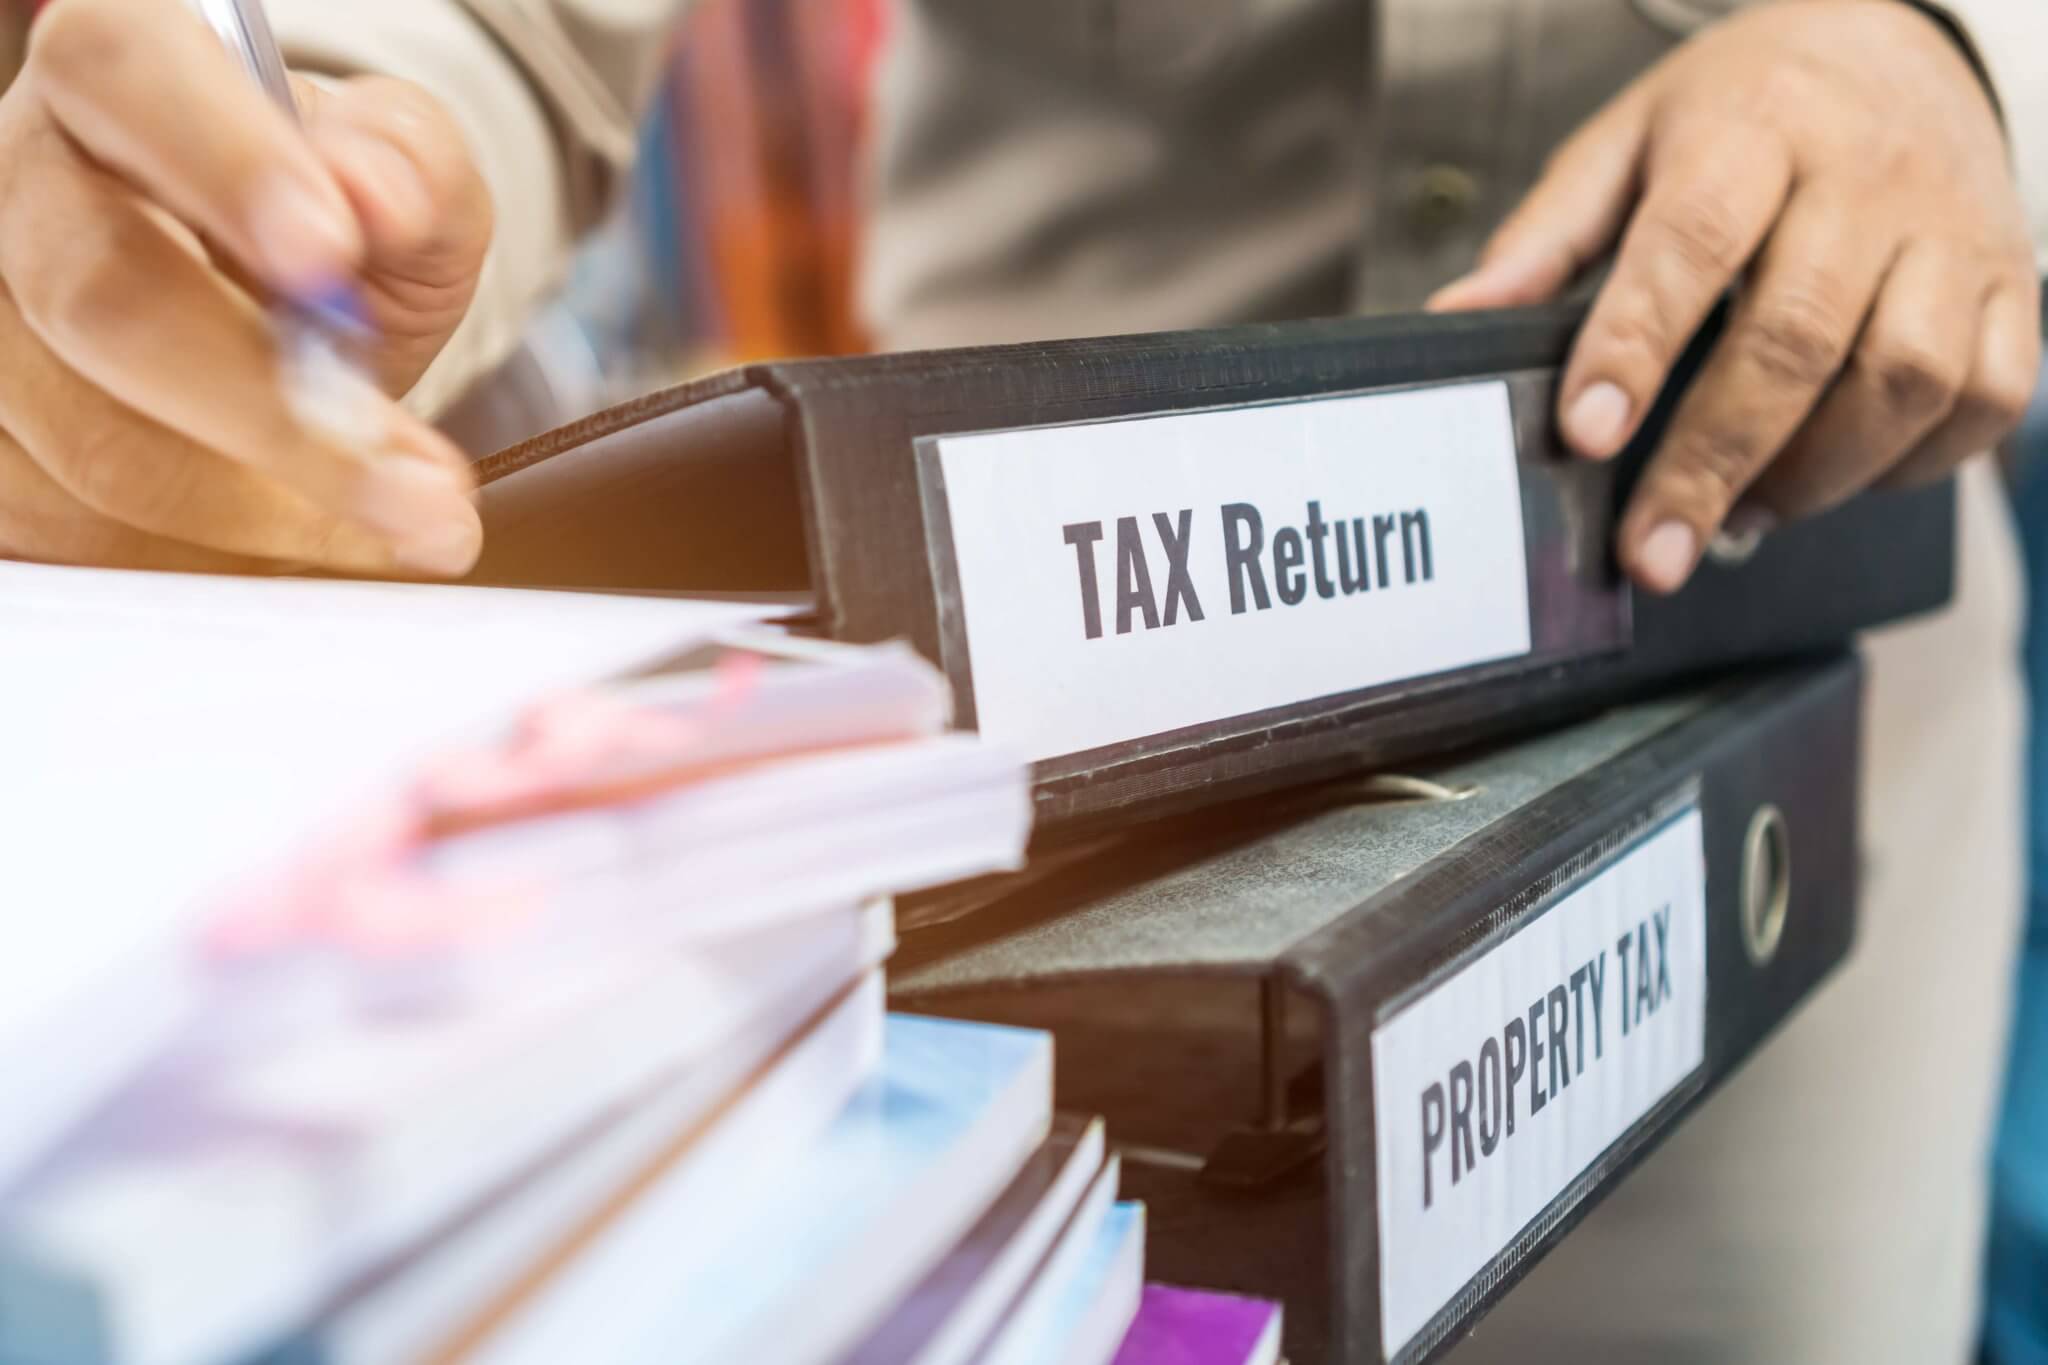 Wyoming Property Tax Return